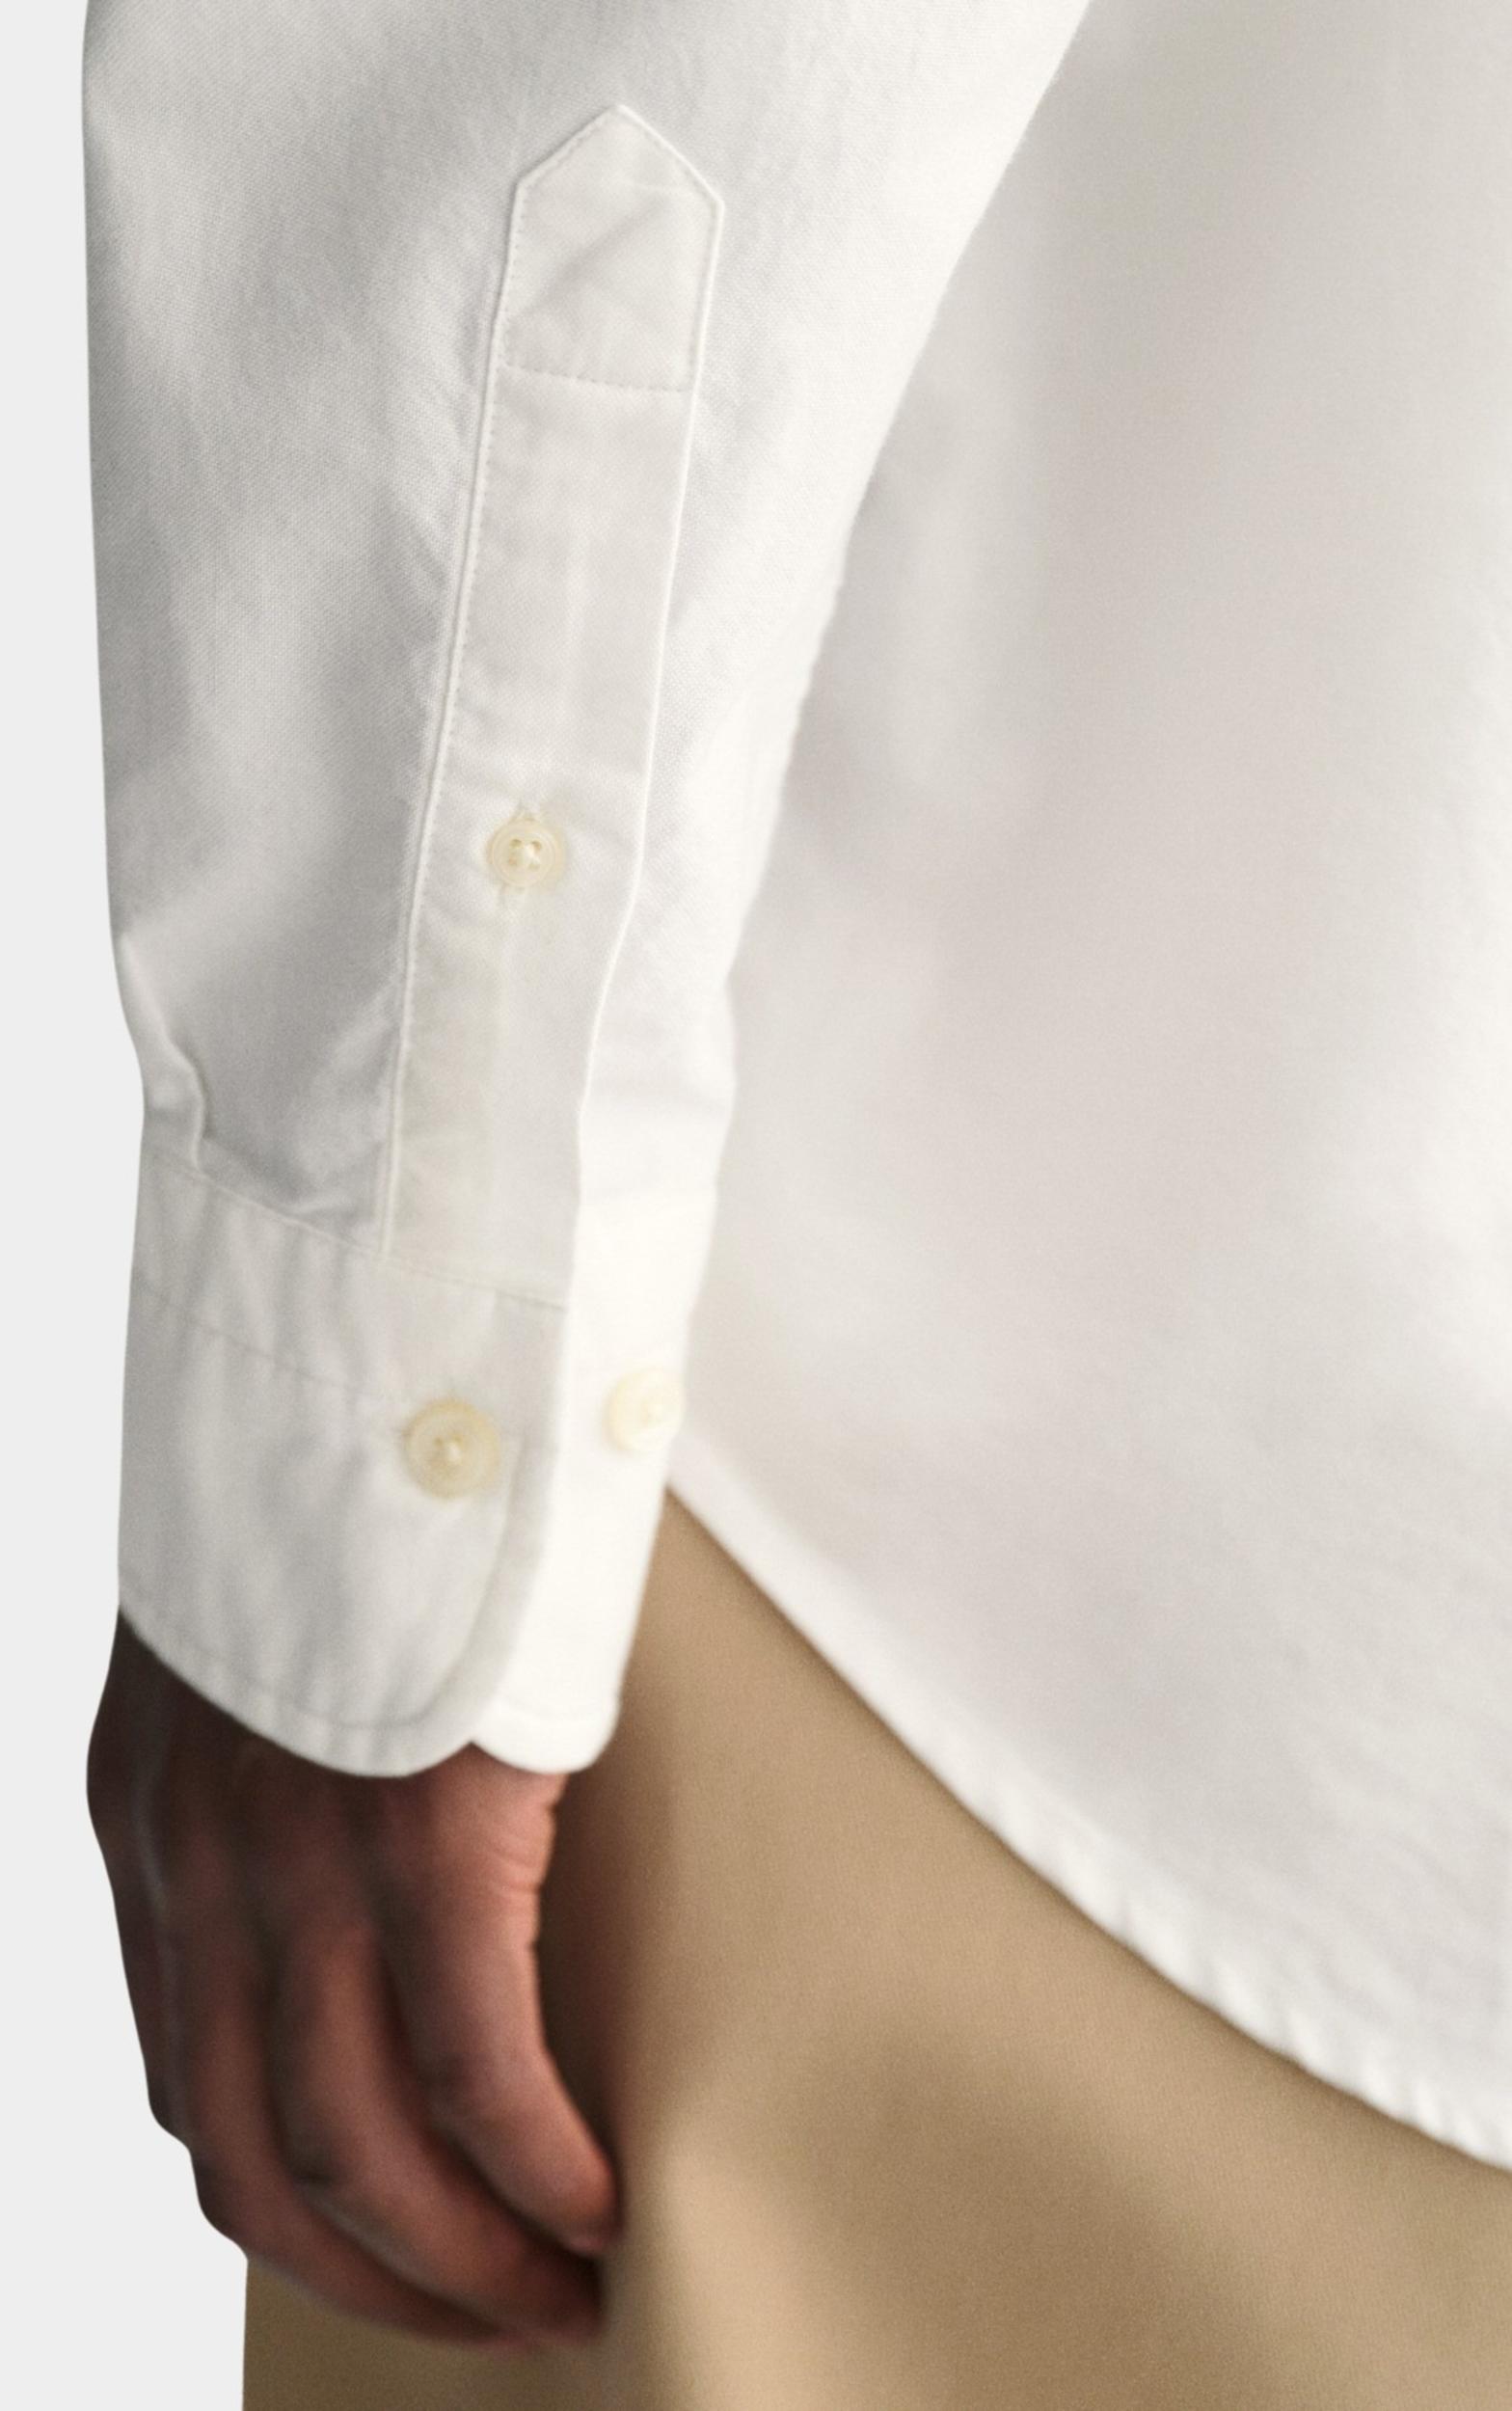 Gant Casual hemd lange mouw Wit Regular Fit Oxford 3000200/110